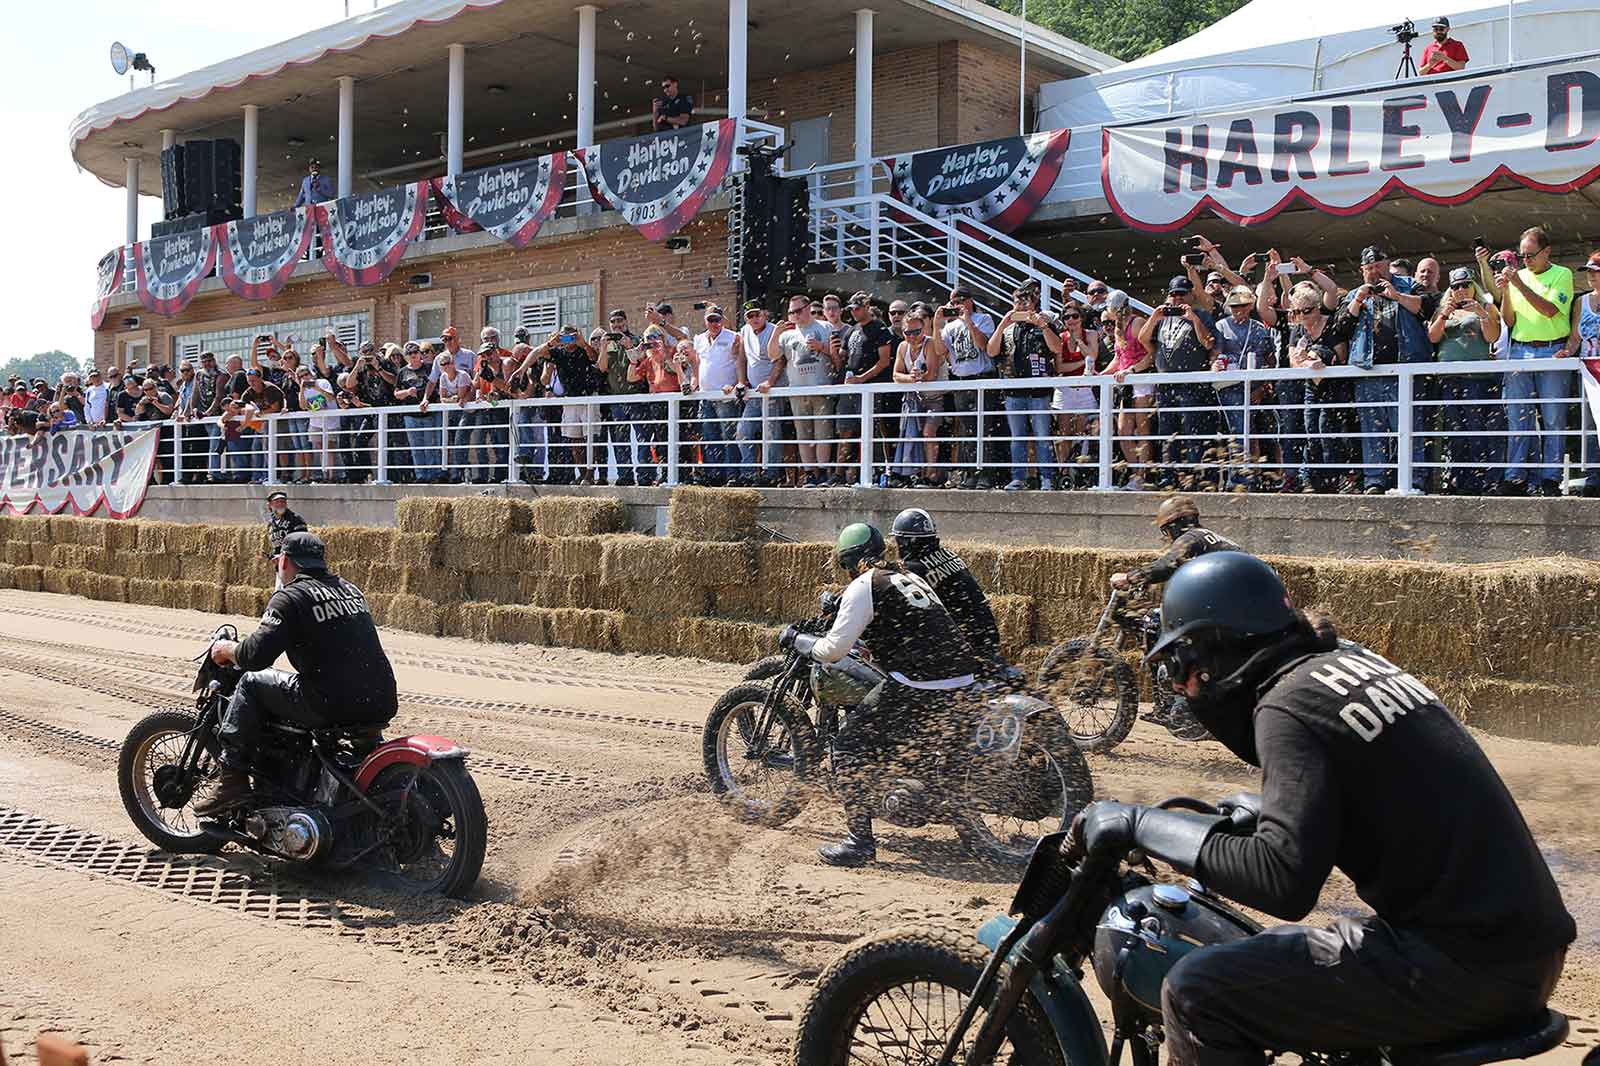 Bradford Beach Brawl motorcycle race